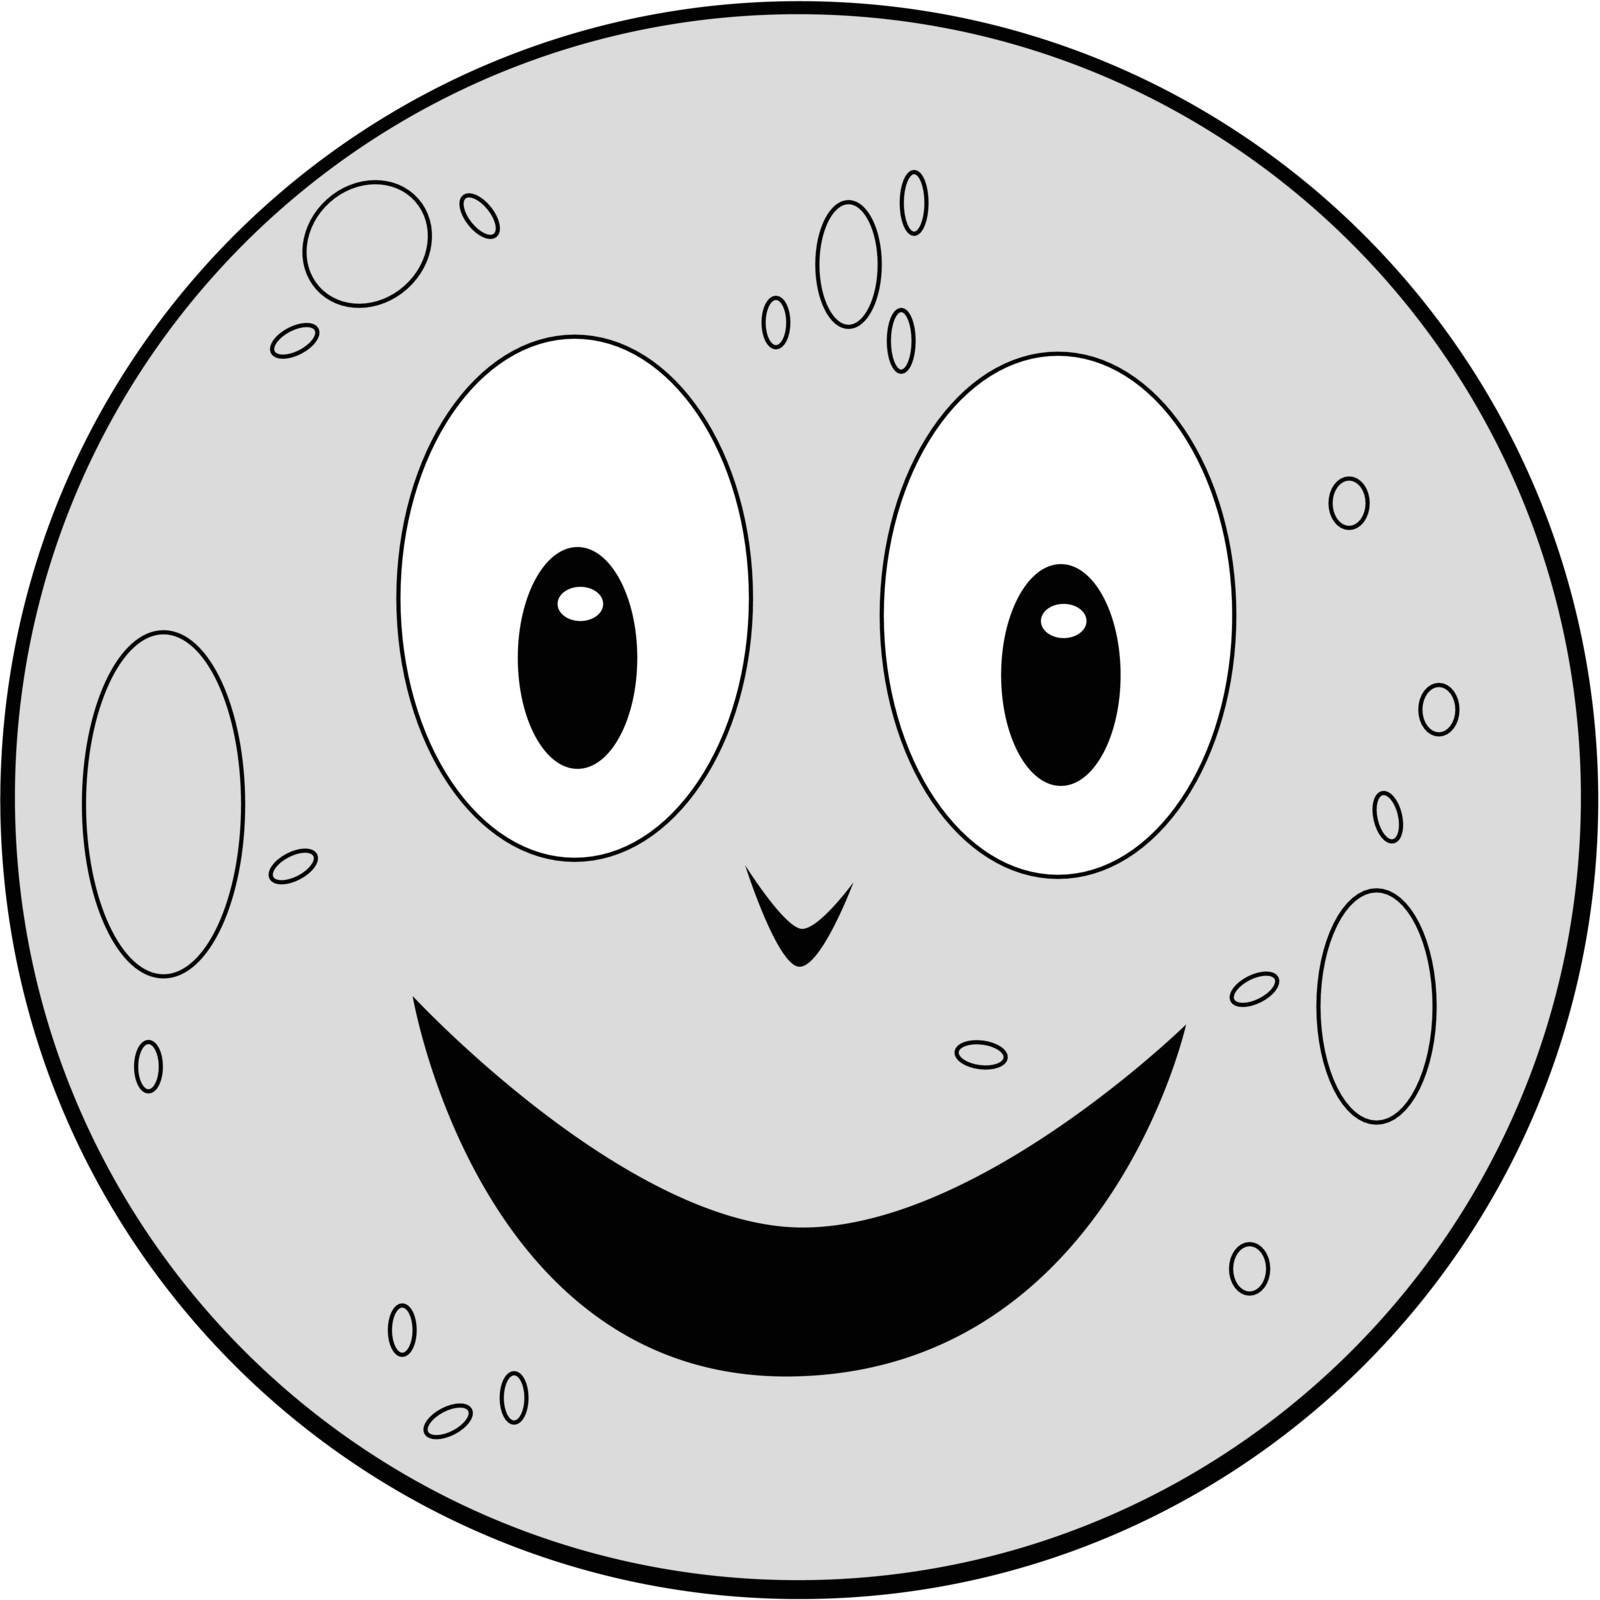 Vector illustration of a cartoon moon smiling